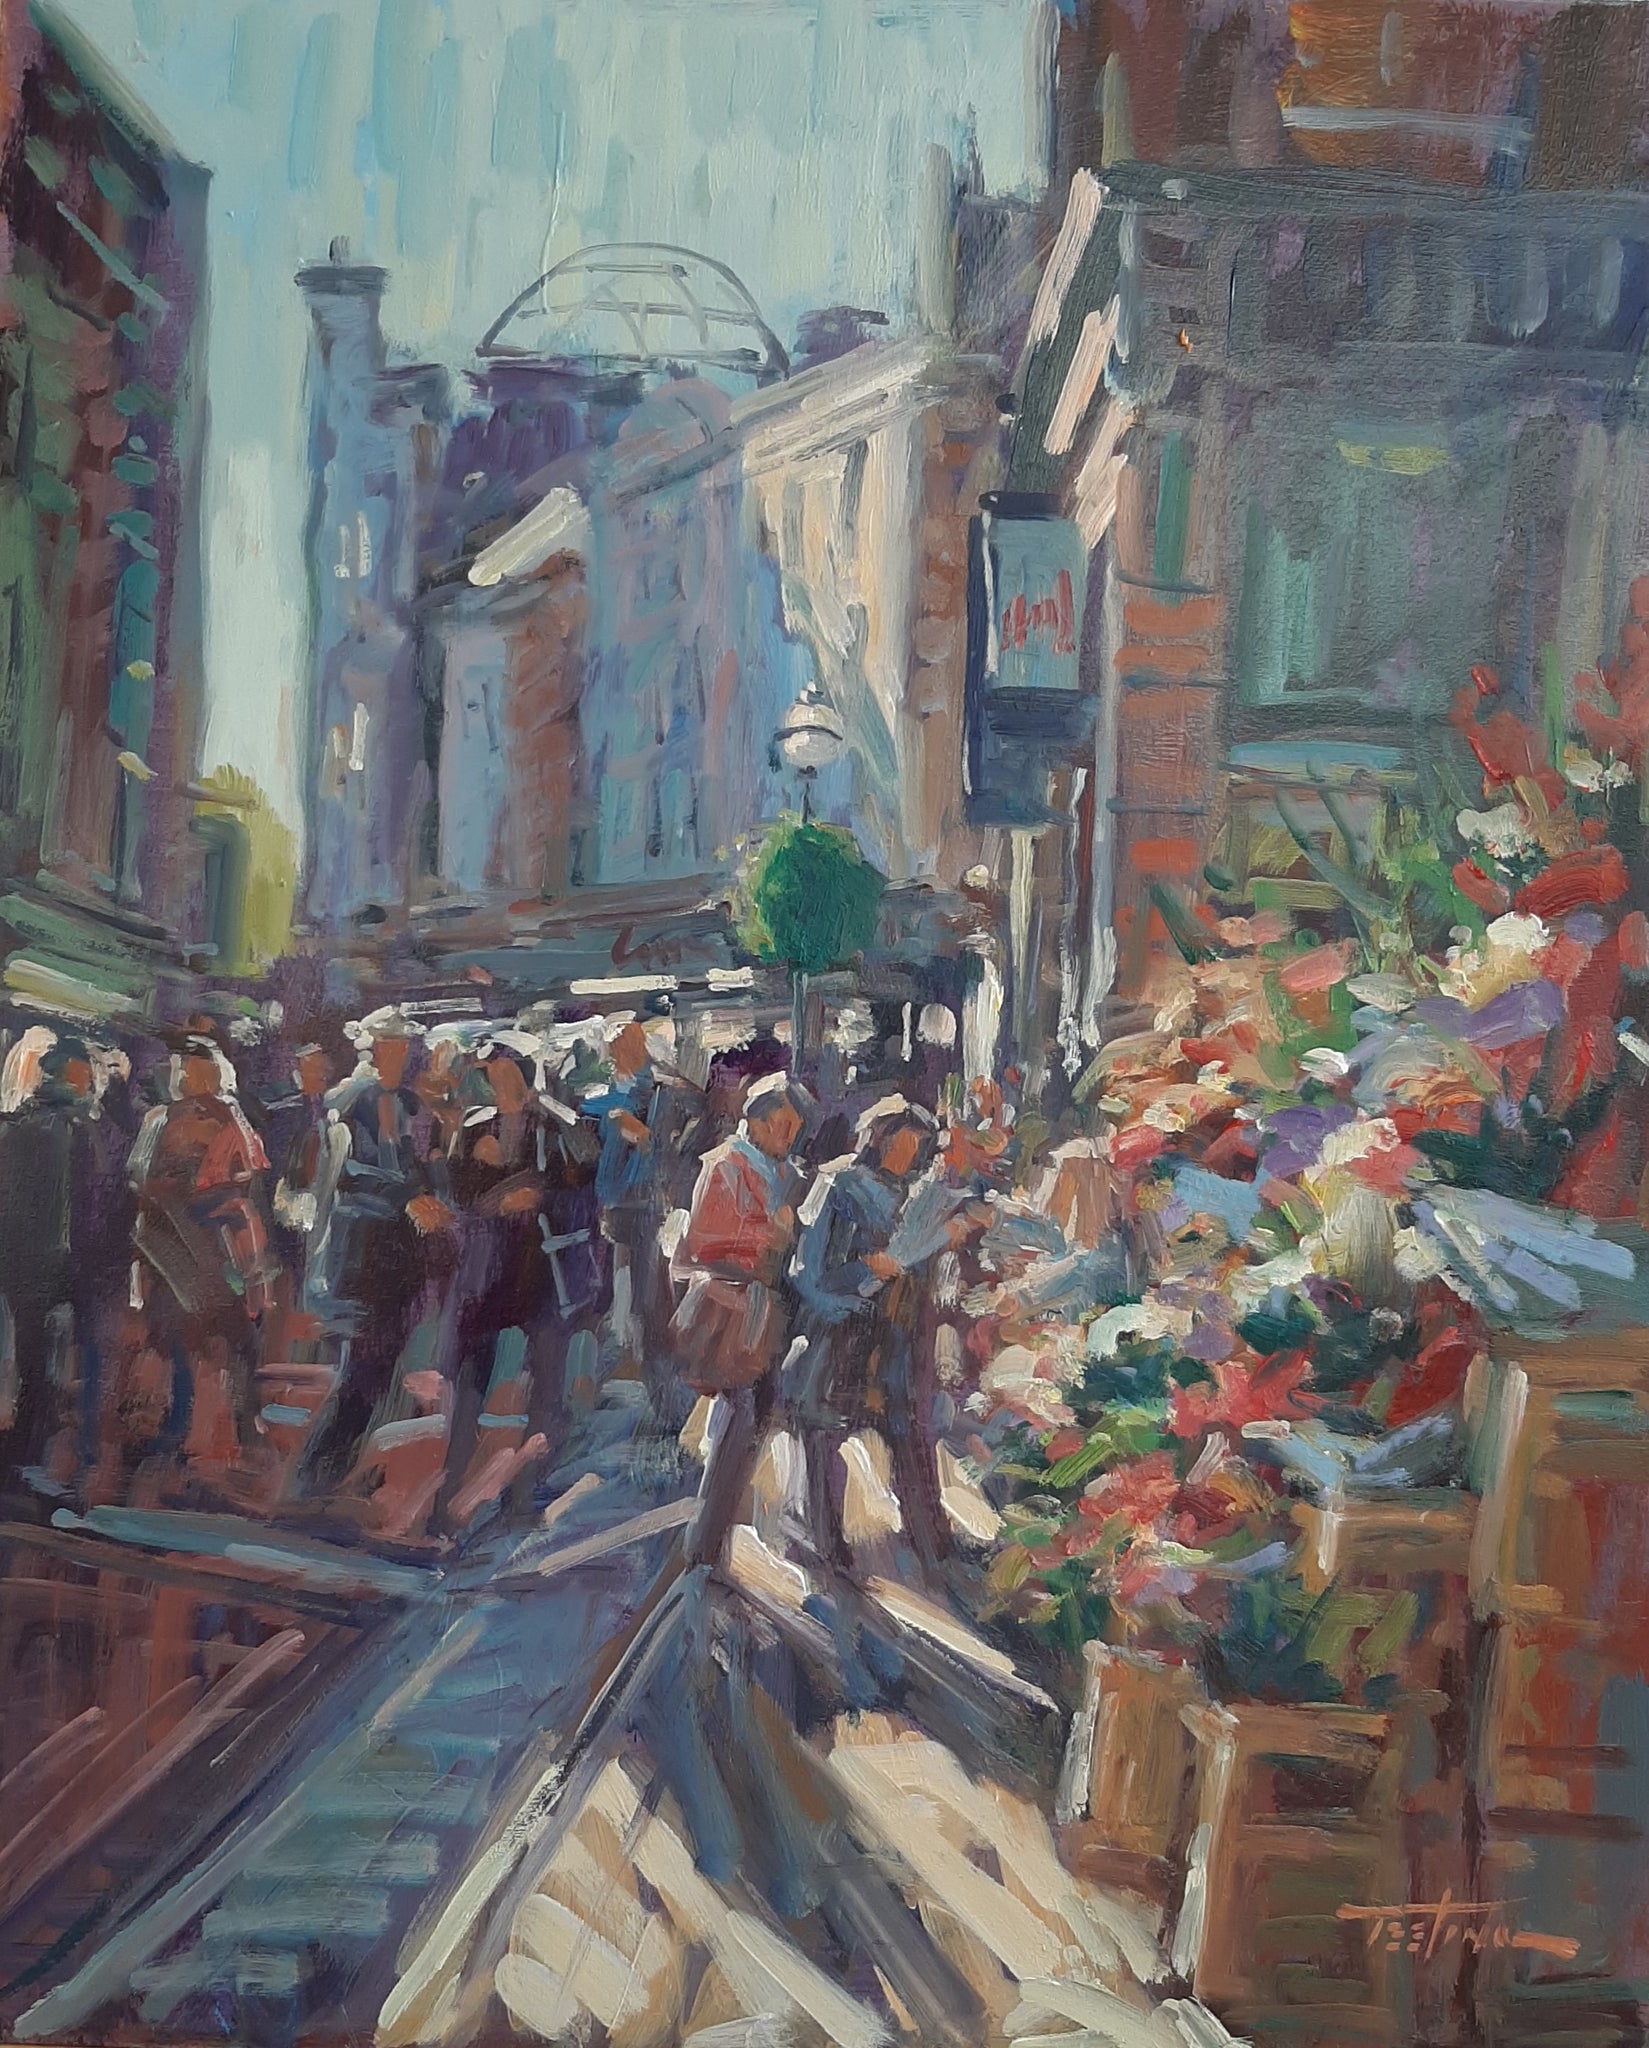 Norman Teeling  "Flower Sellers early afternoon on Grafton Street"